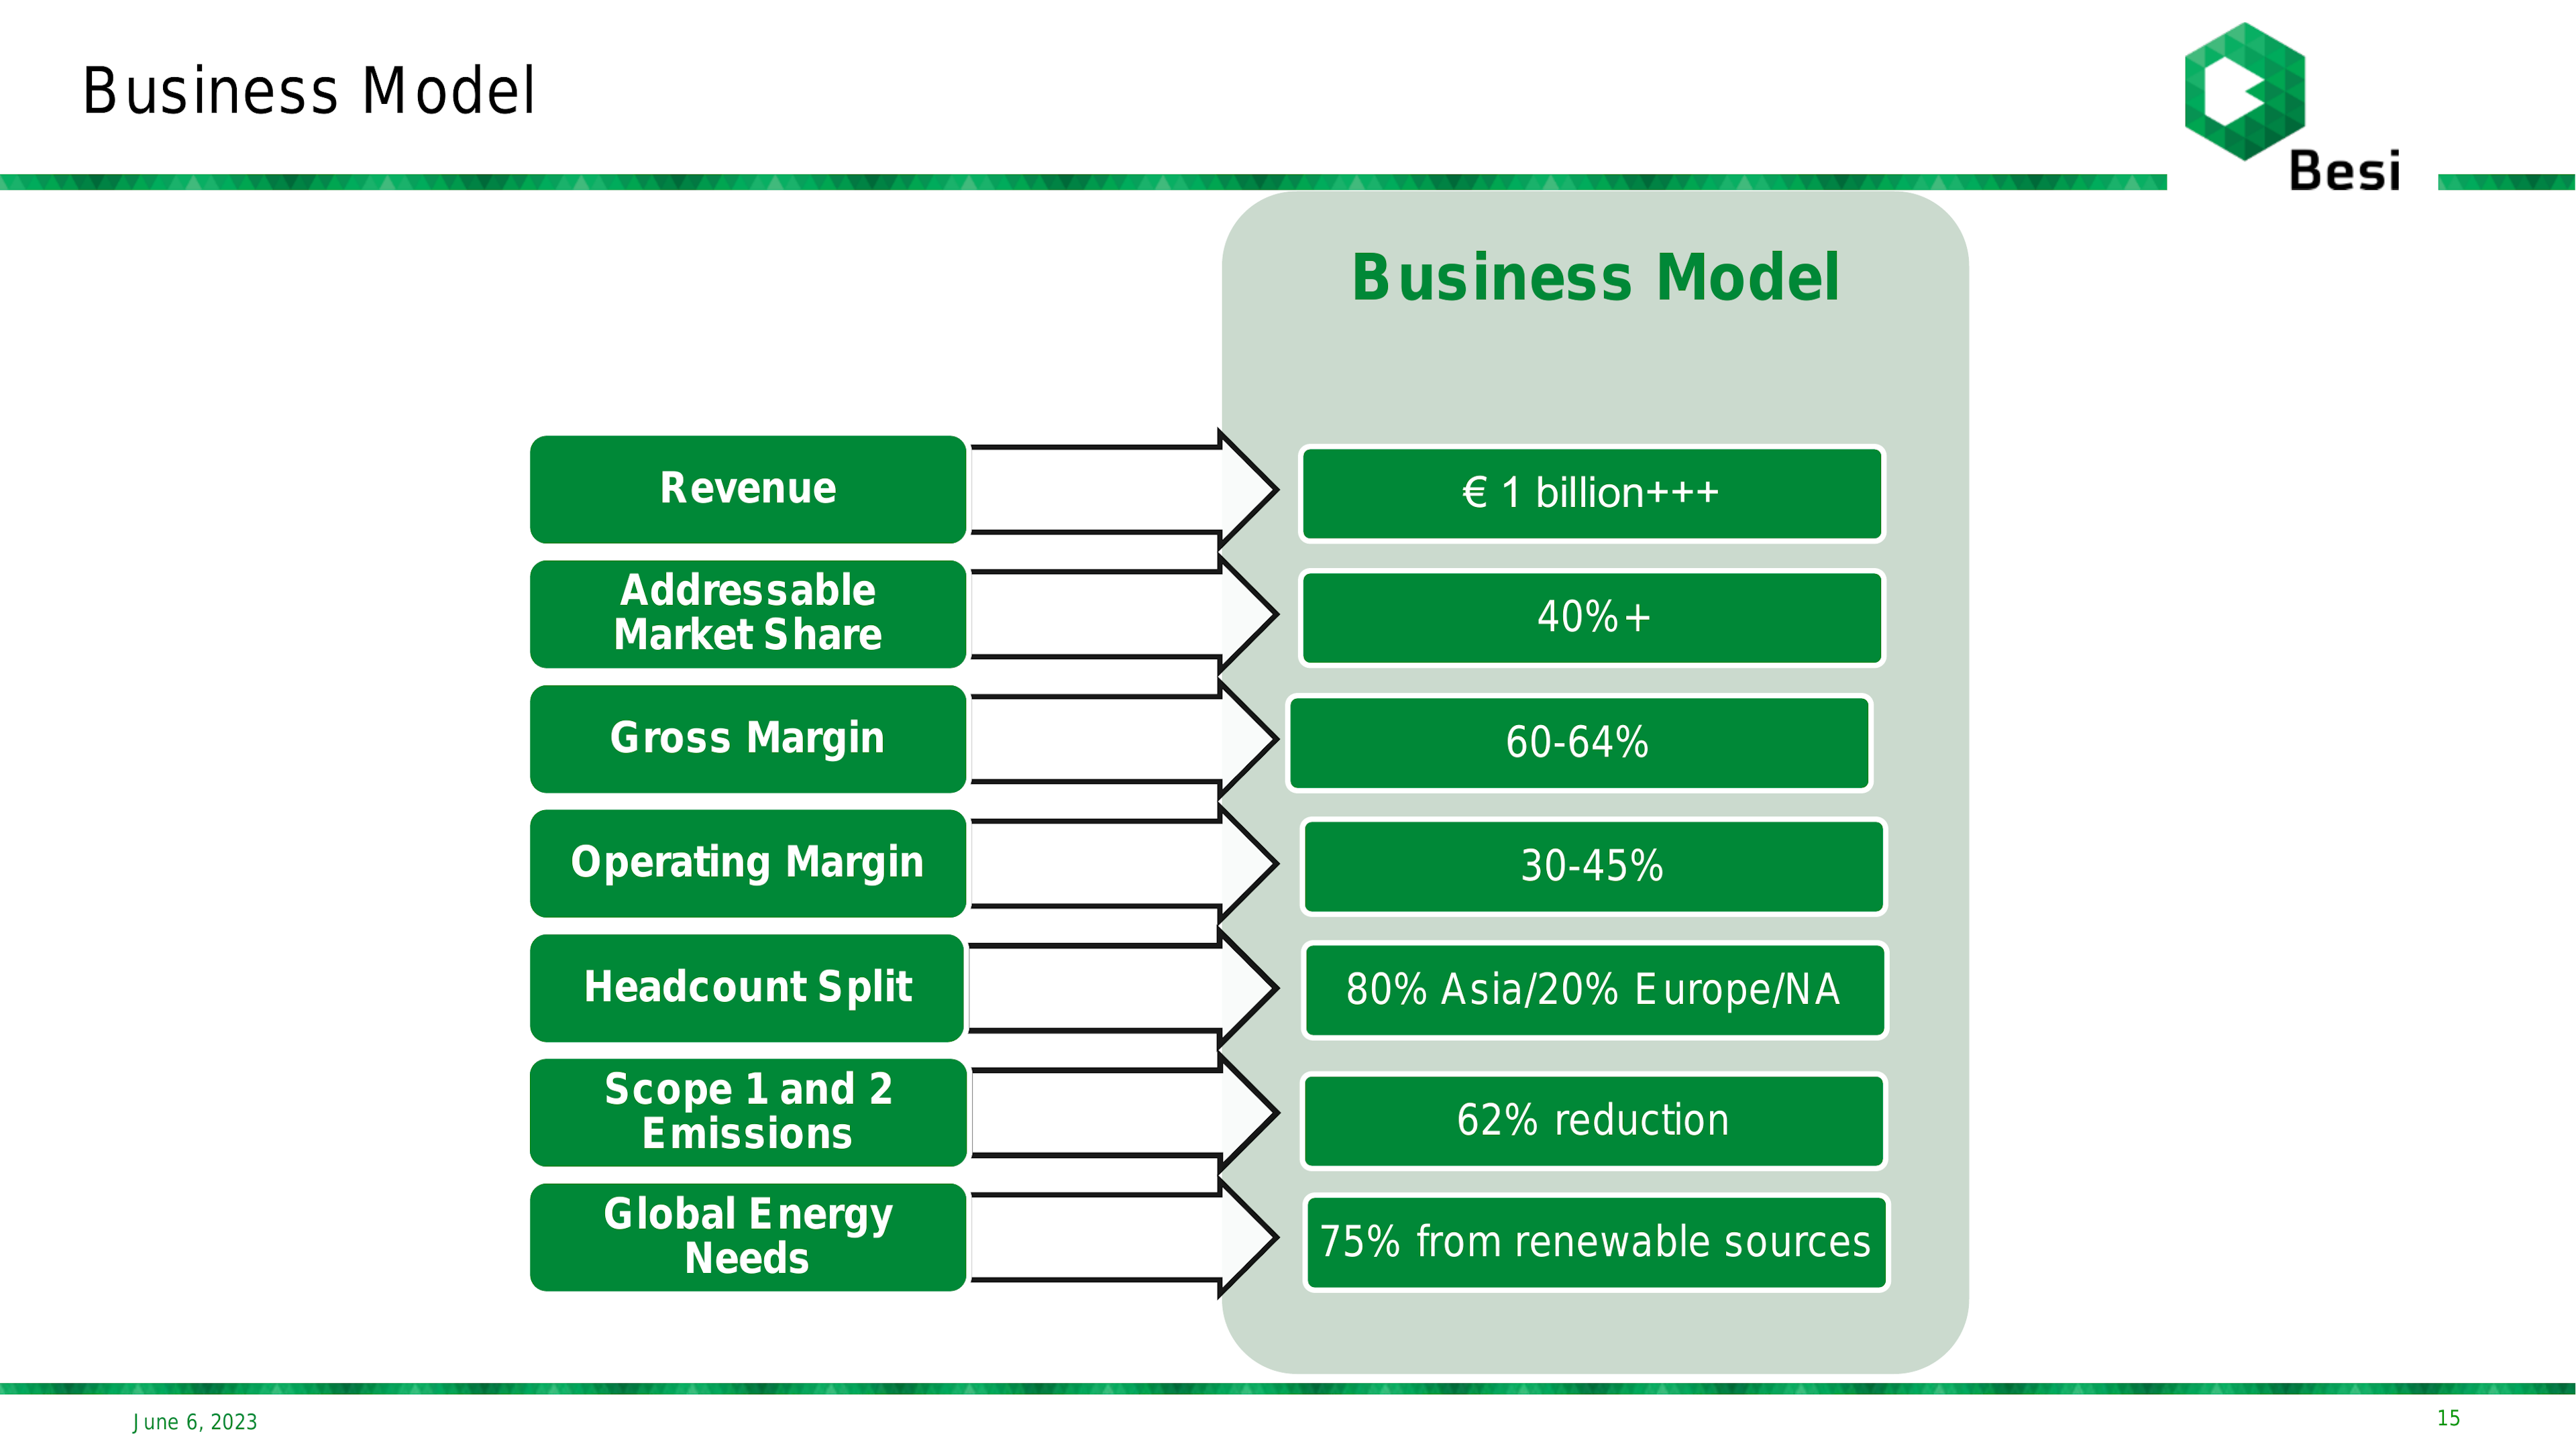 Business Model 

Jun